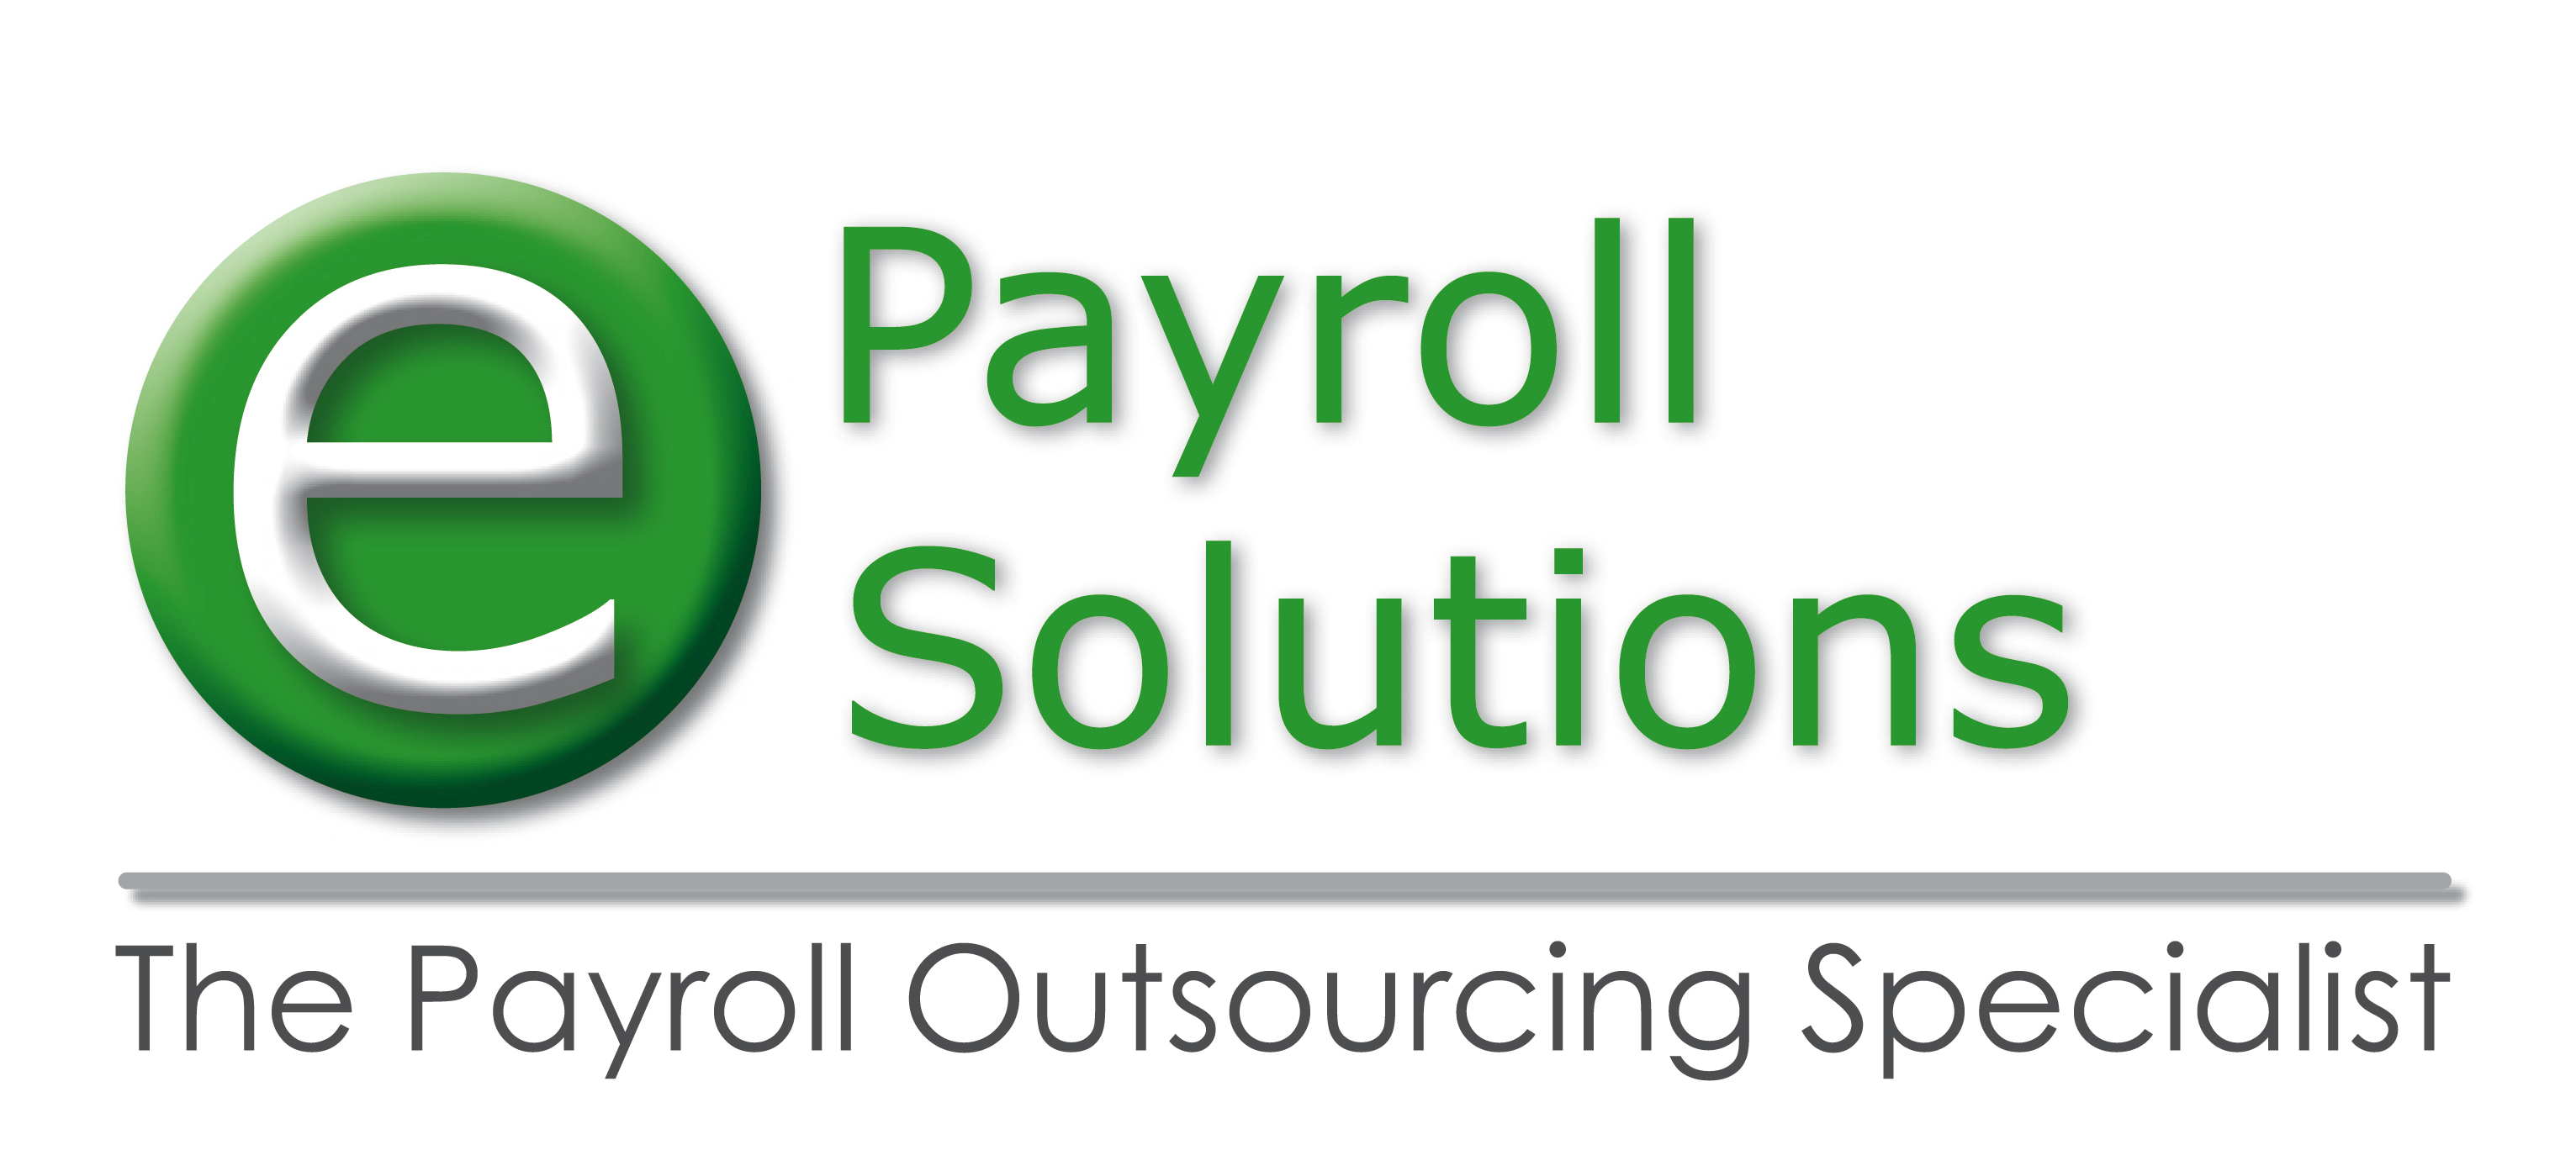 E-Payroll Solutions